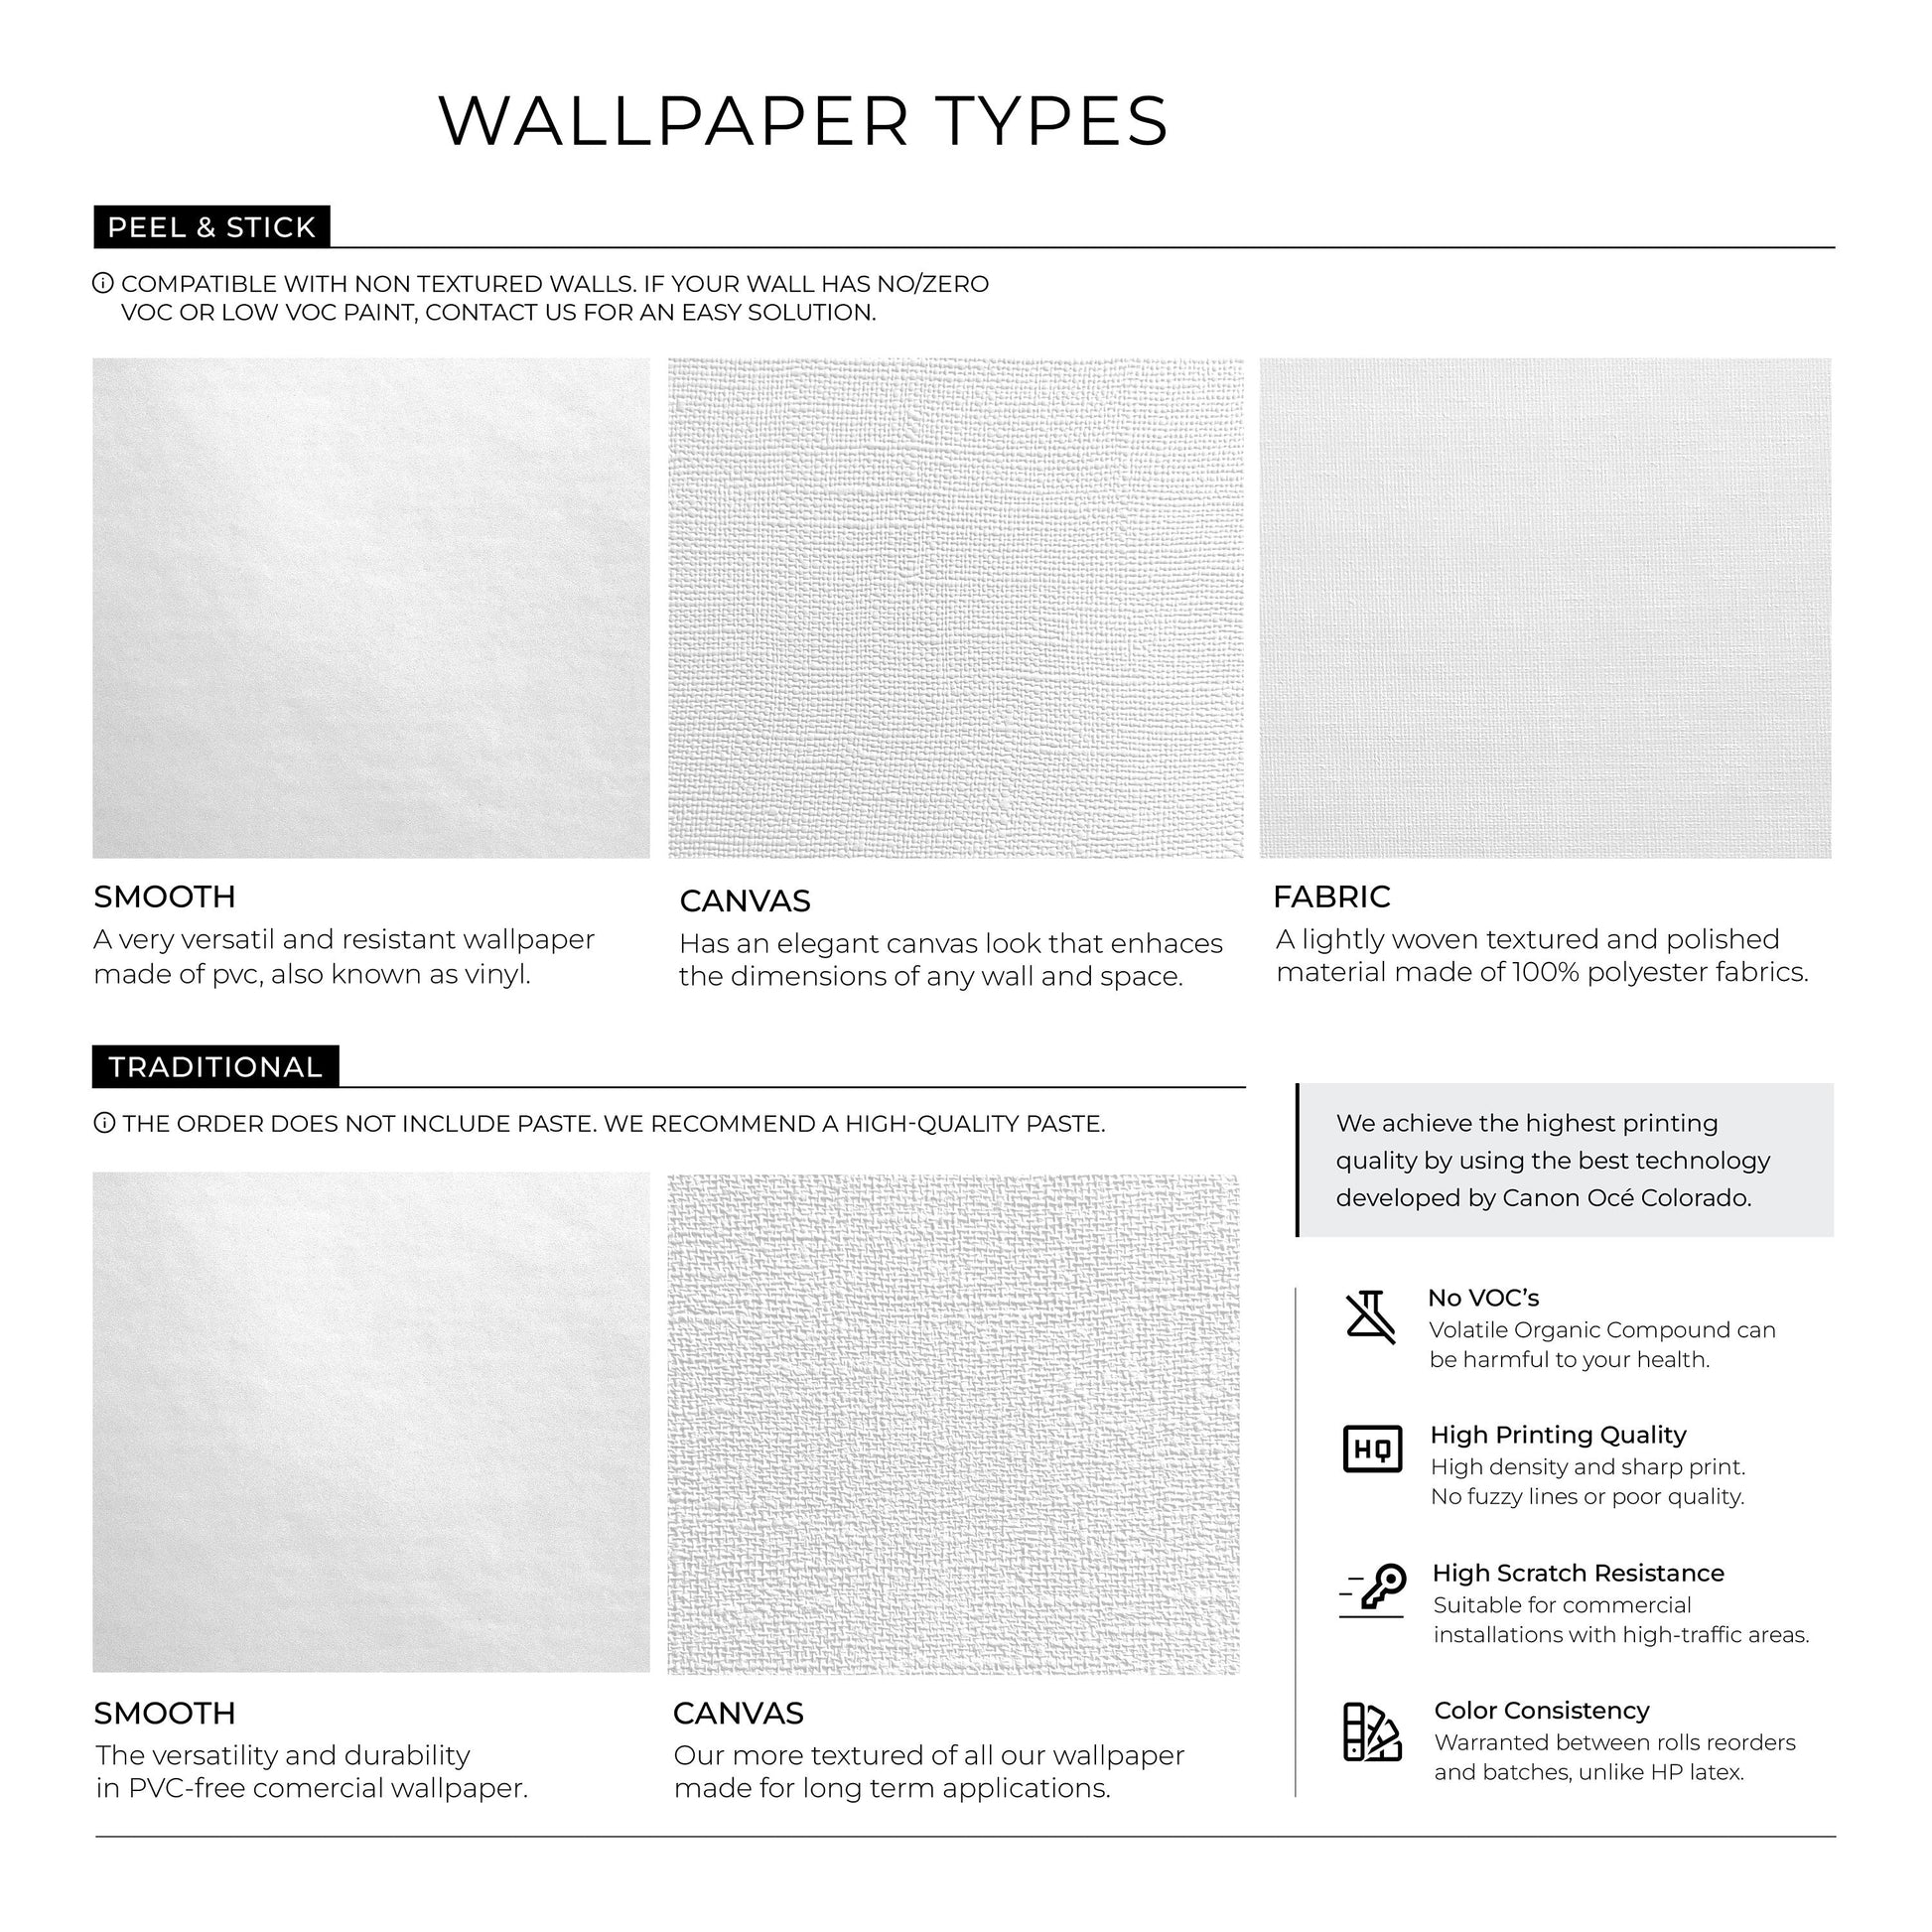 Wallpaper Peel and Stick Wallpaper Removable Wallpaper Home Decor Wall Art Wall Decor Room Decor / Gray Black Snake Wallpaper - C606